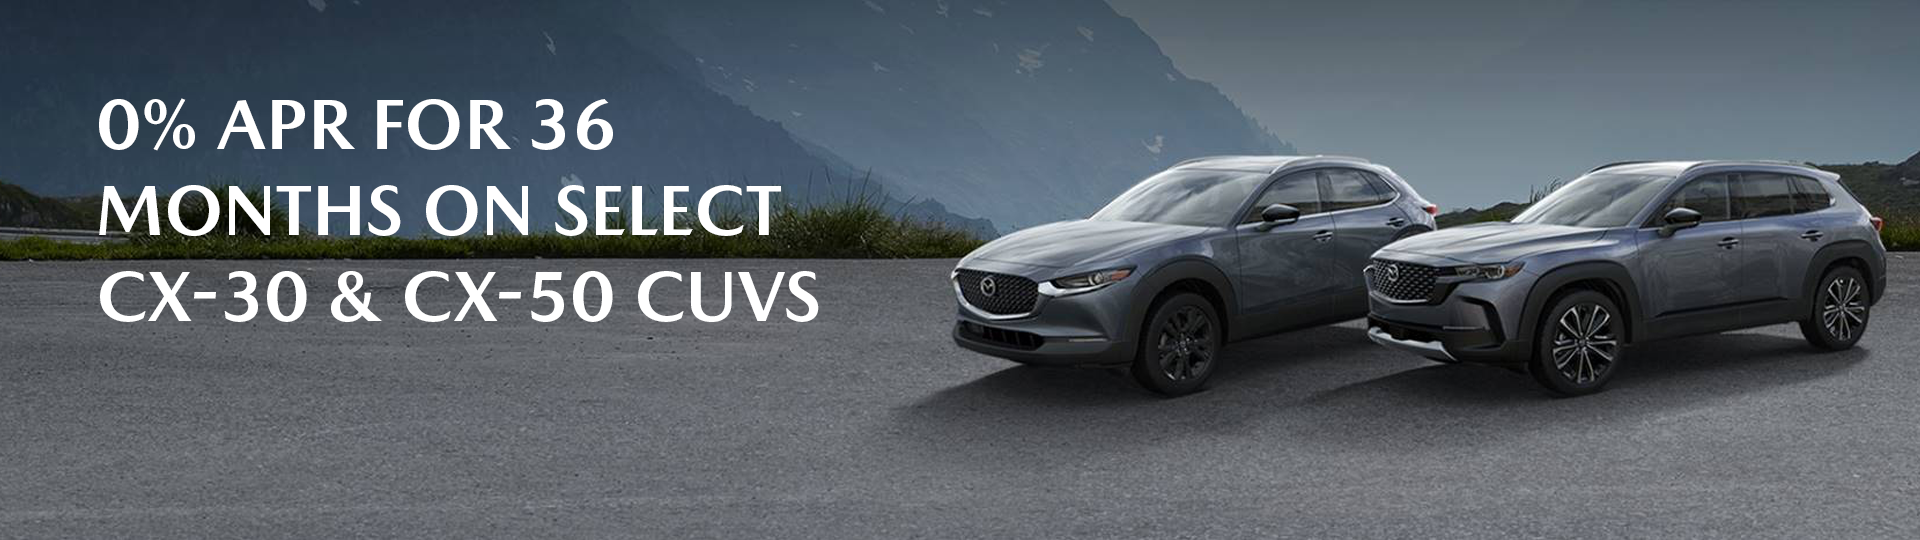 0% APR on select Mazda CX-30 and CX-50 CUVs